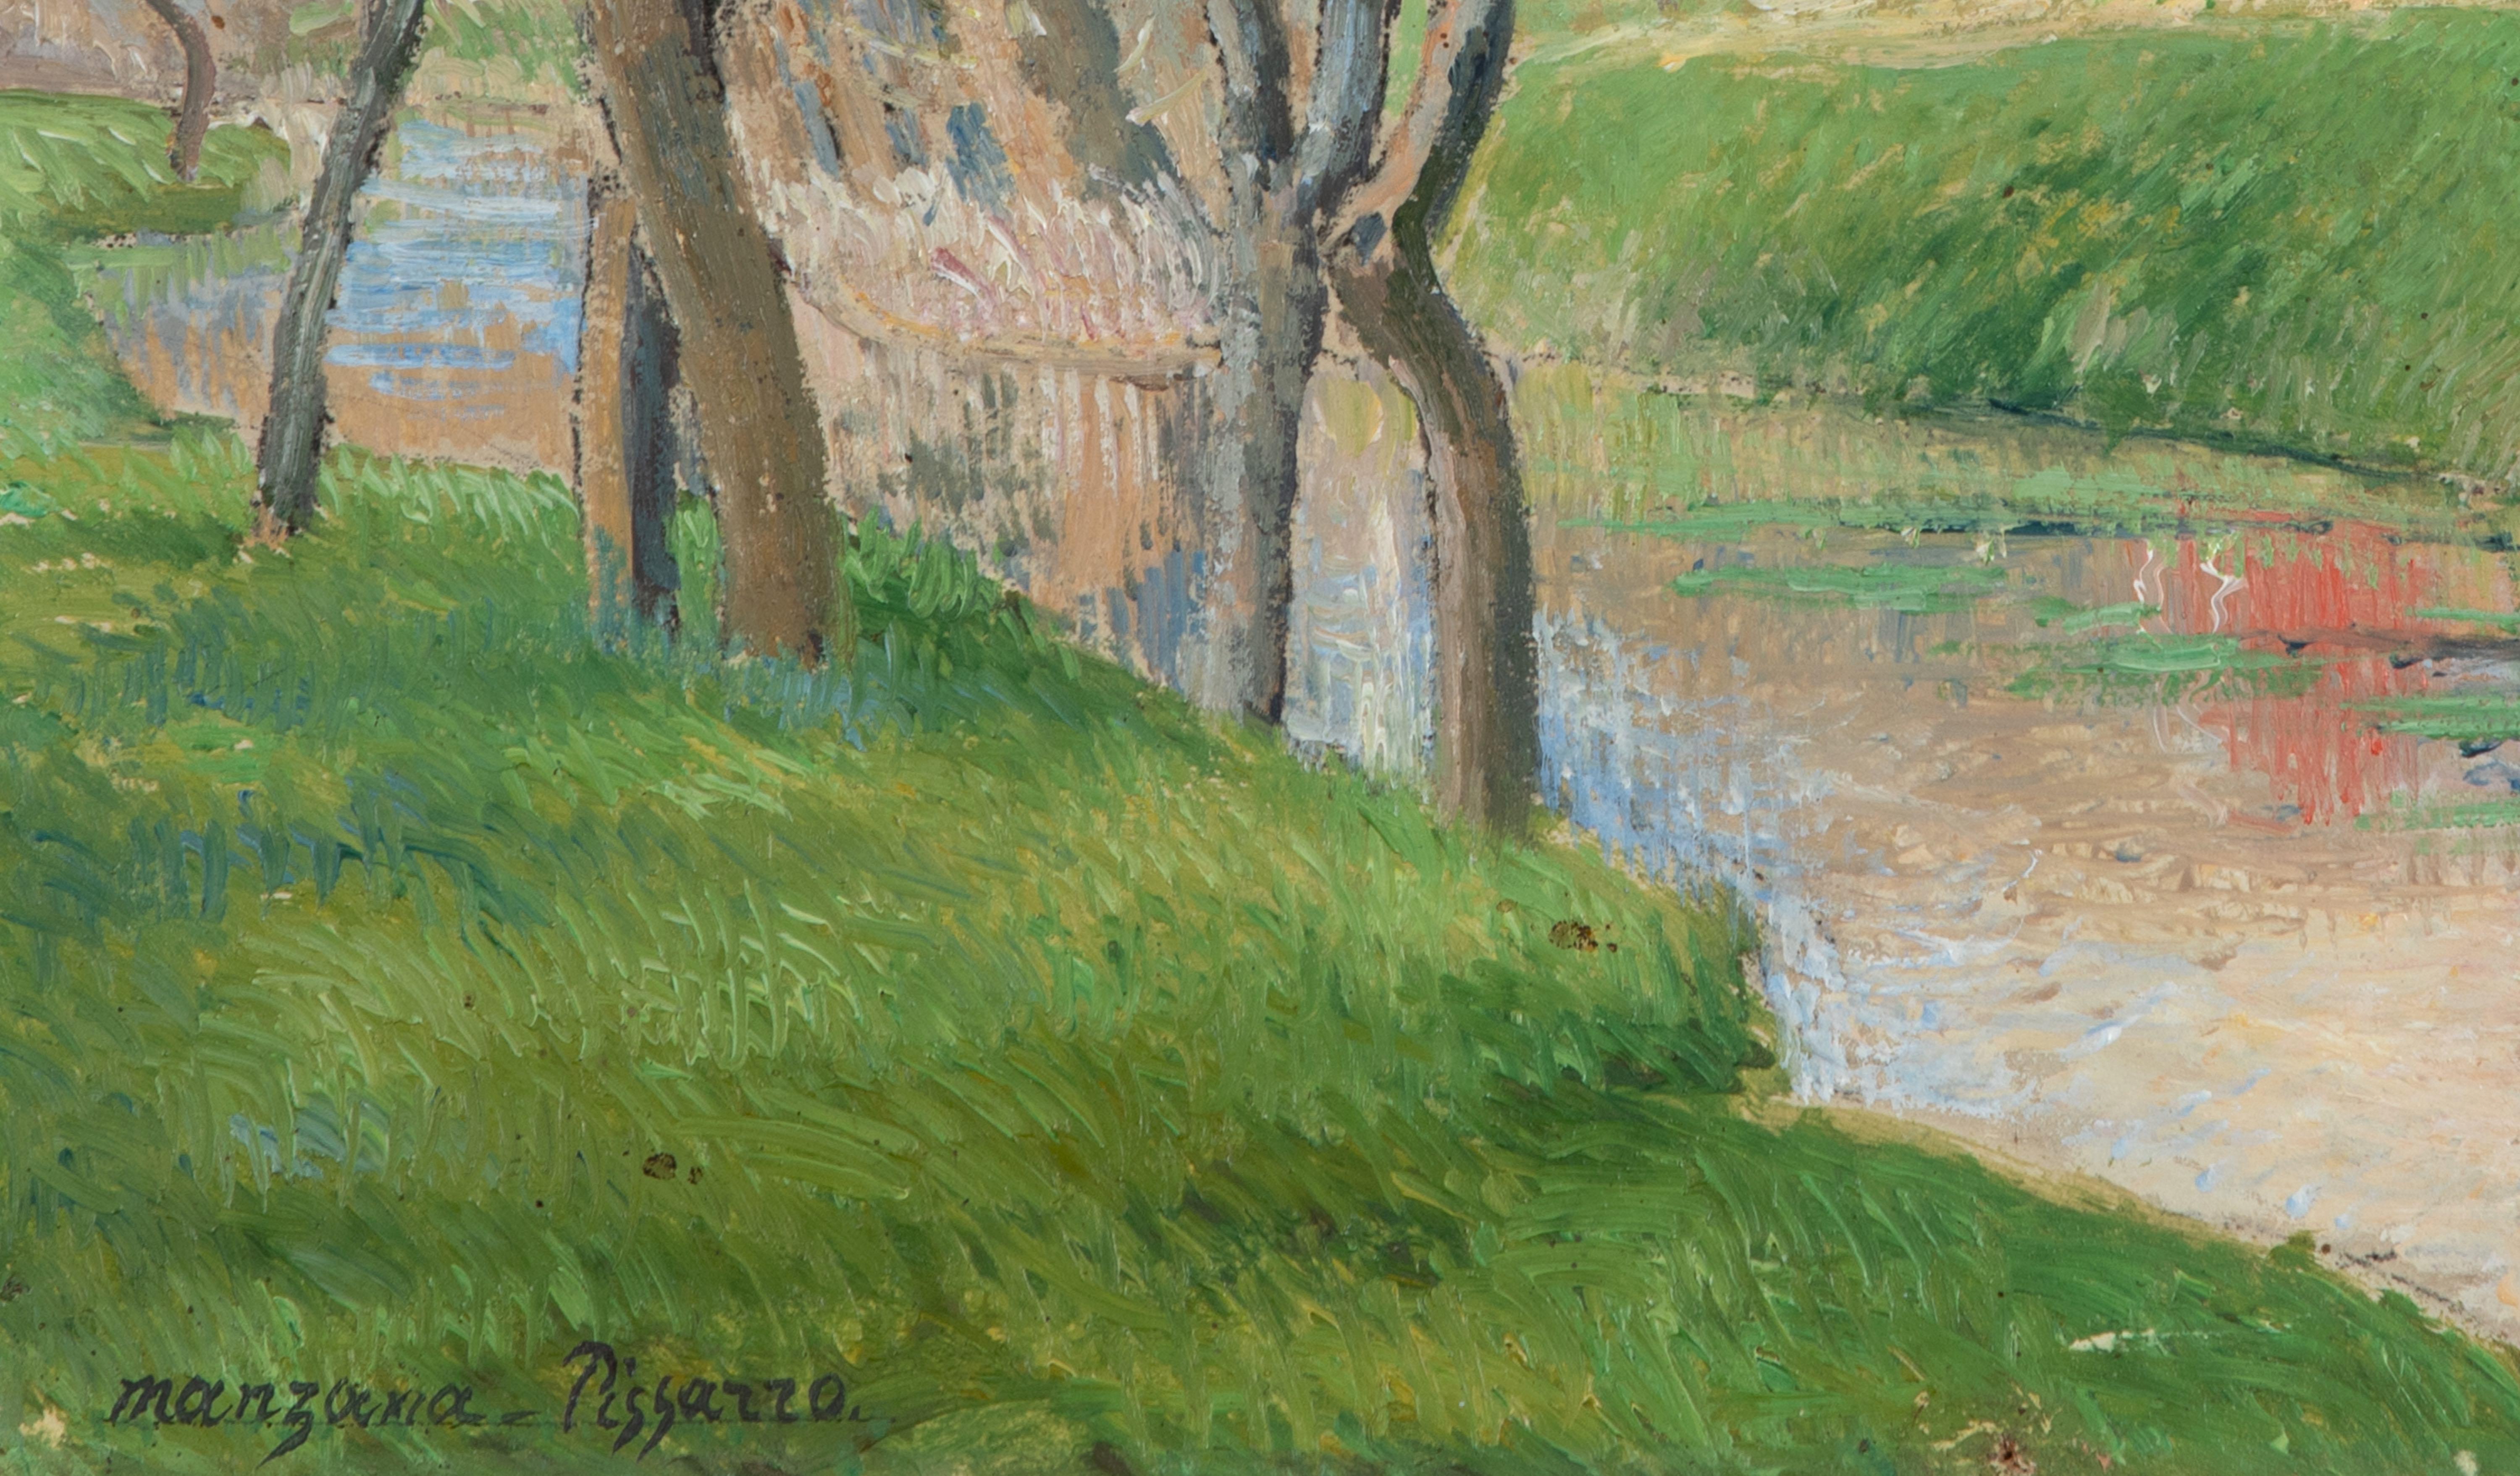 La Petite Rivière Vezillon by Georges Manzana Pissarro - River scene painting For Sale 1